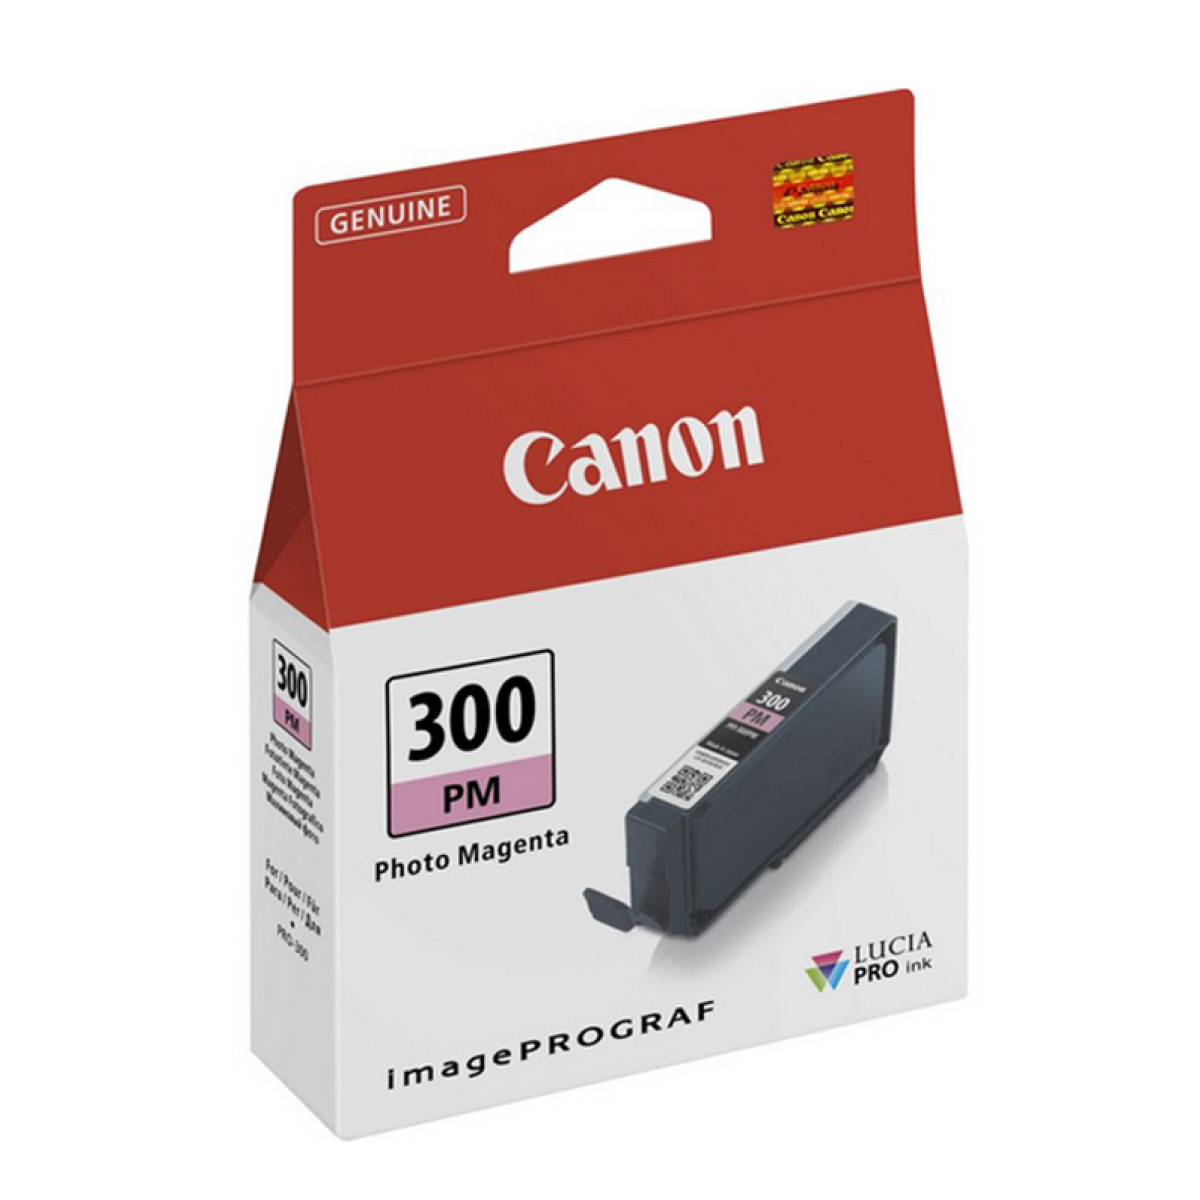 Canon PFI-300PM photo magenta Tinte für ImagePrograf PRO-300 A3+